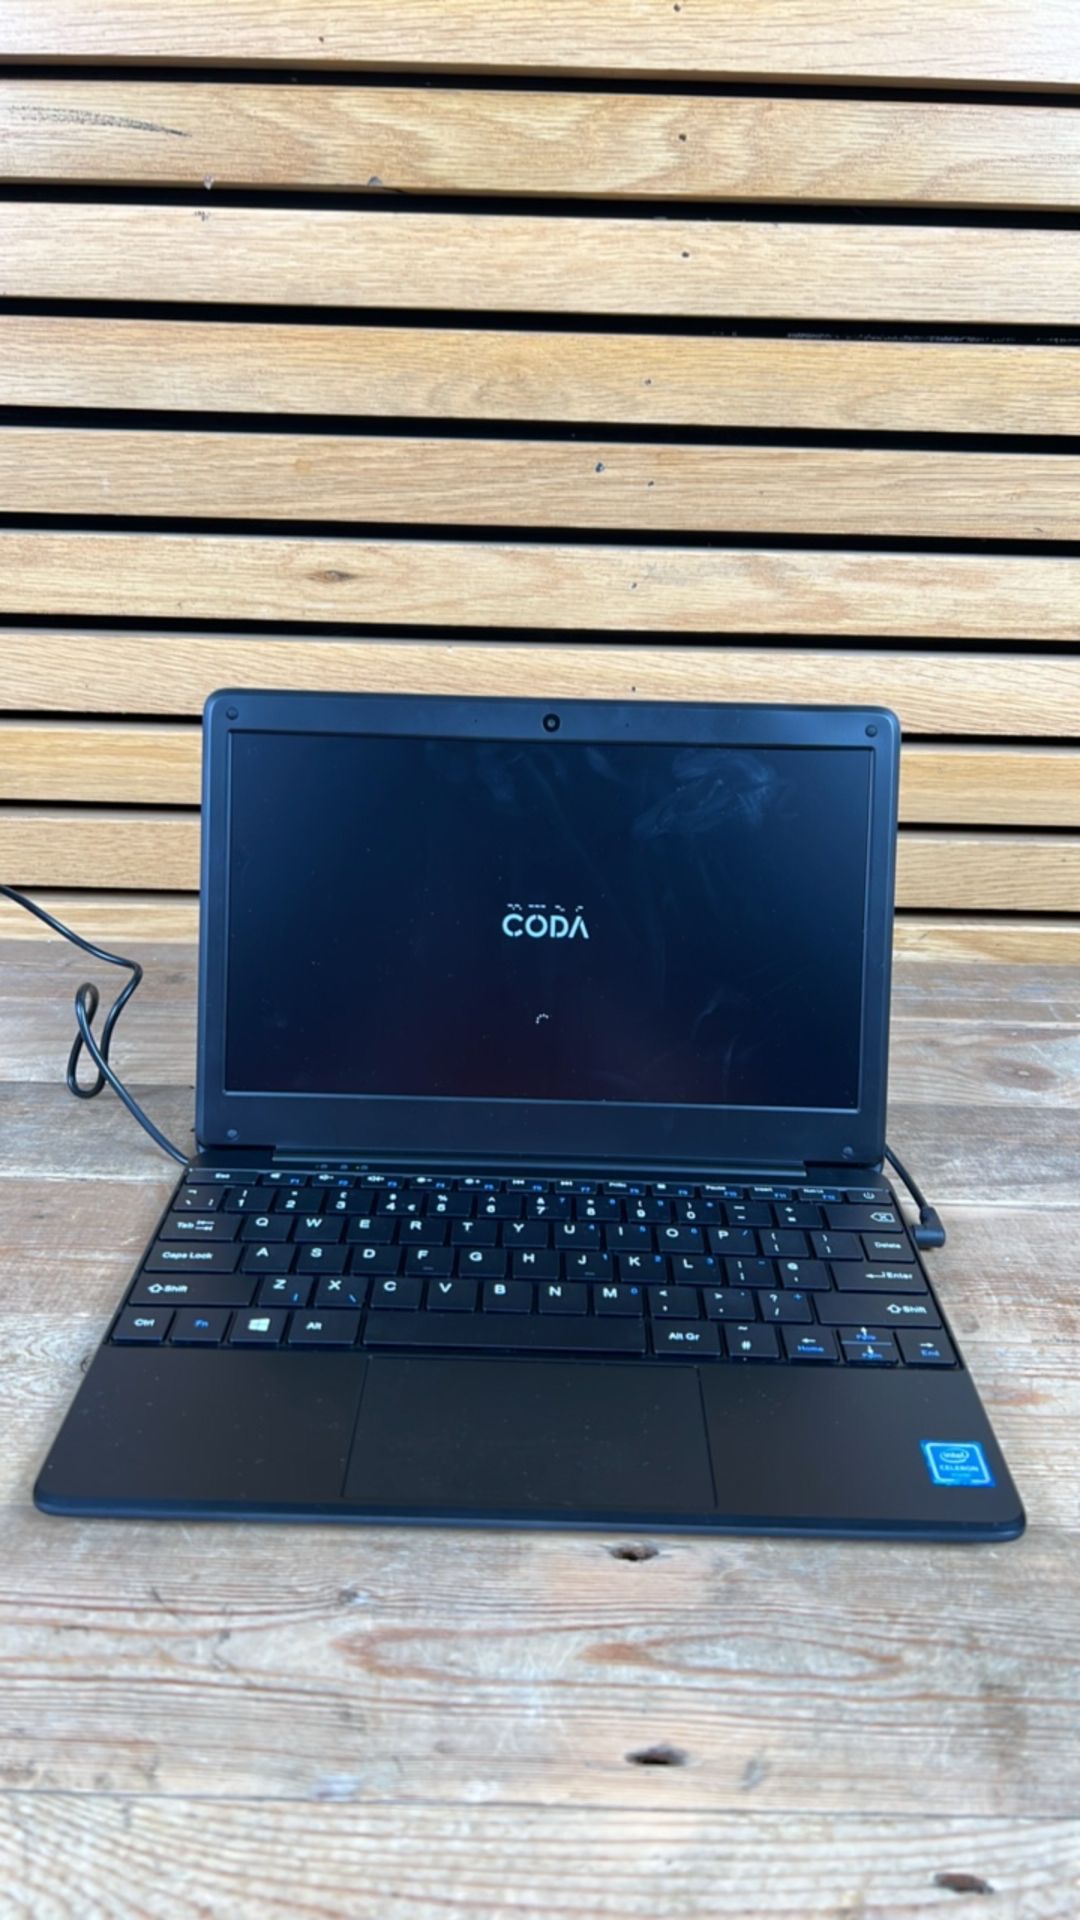 Coda 1.1 With Windows 10 - Bild 2 aus 5